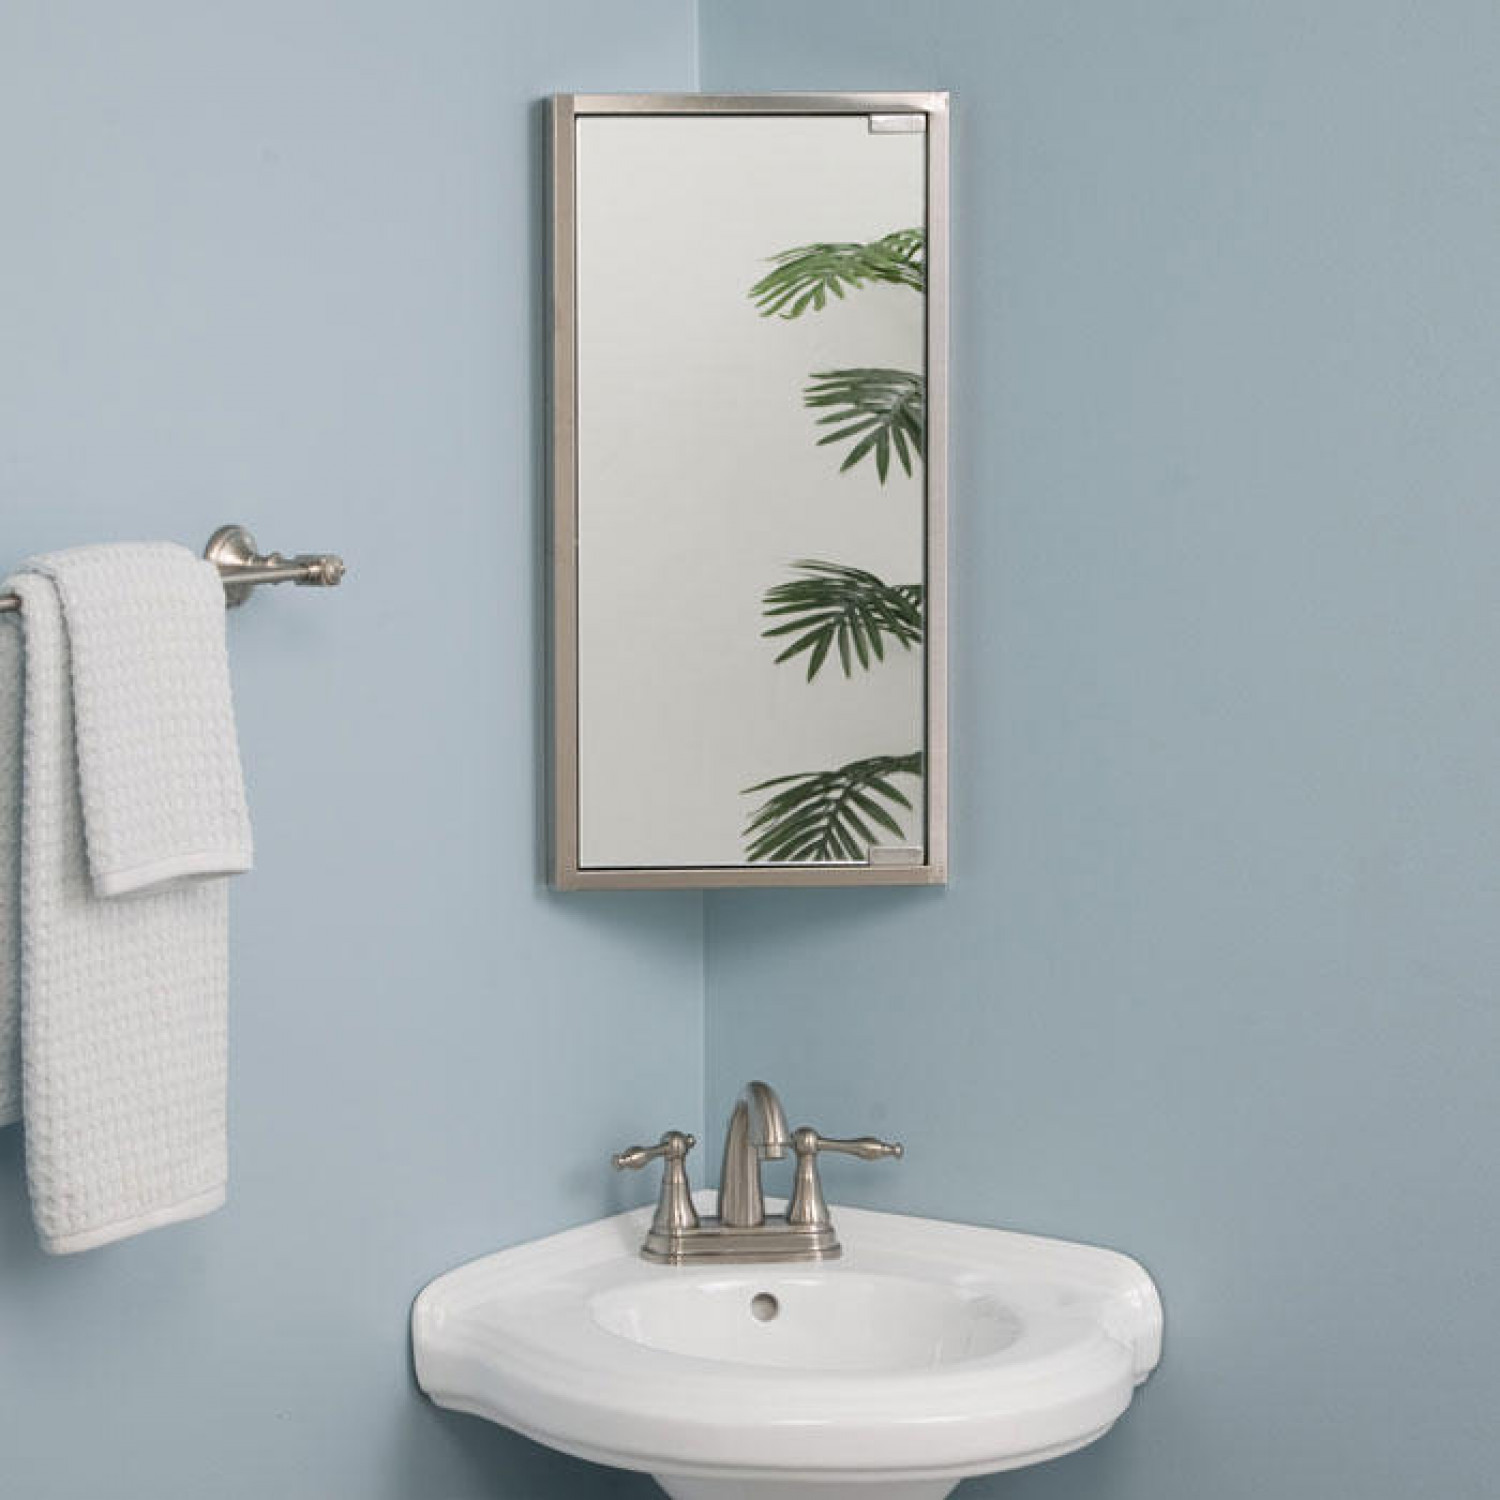 Corner Mirror Bathroom Cabinet
 Kugler Stainless Steel Corner Medicine Cabinet Bathroom